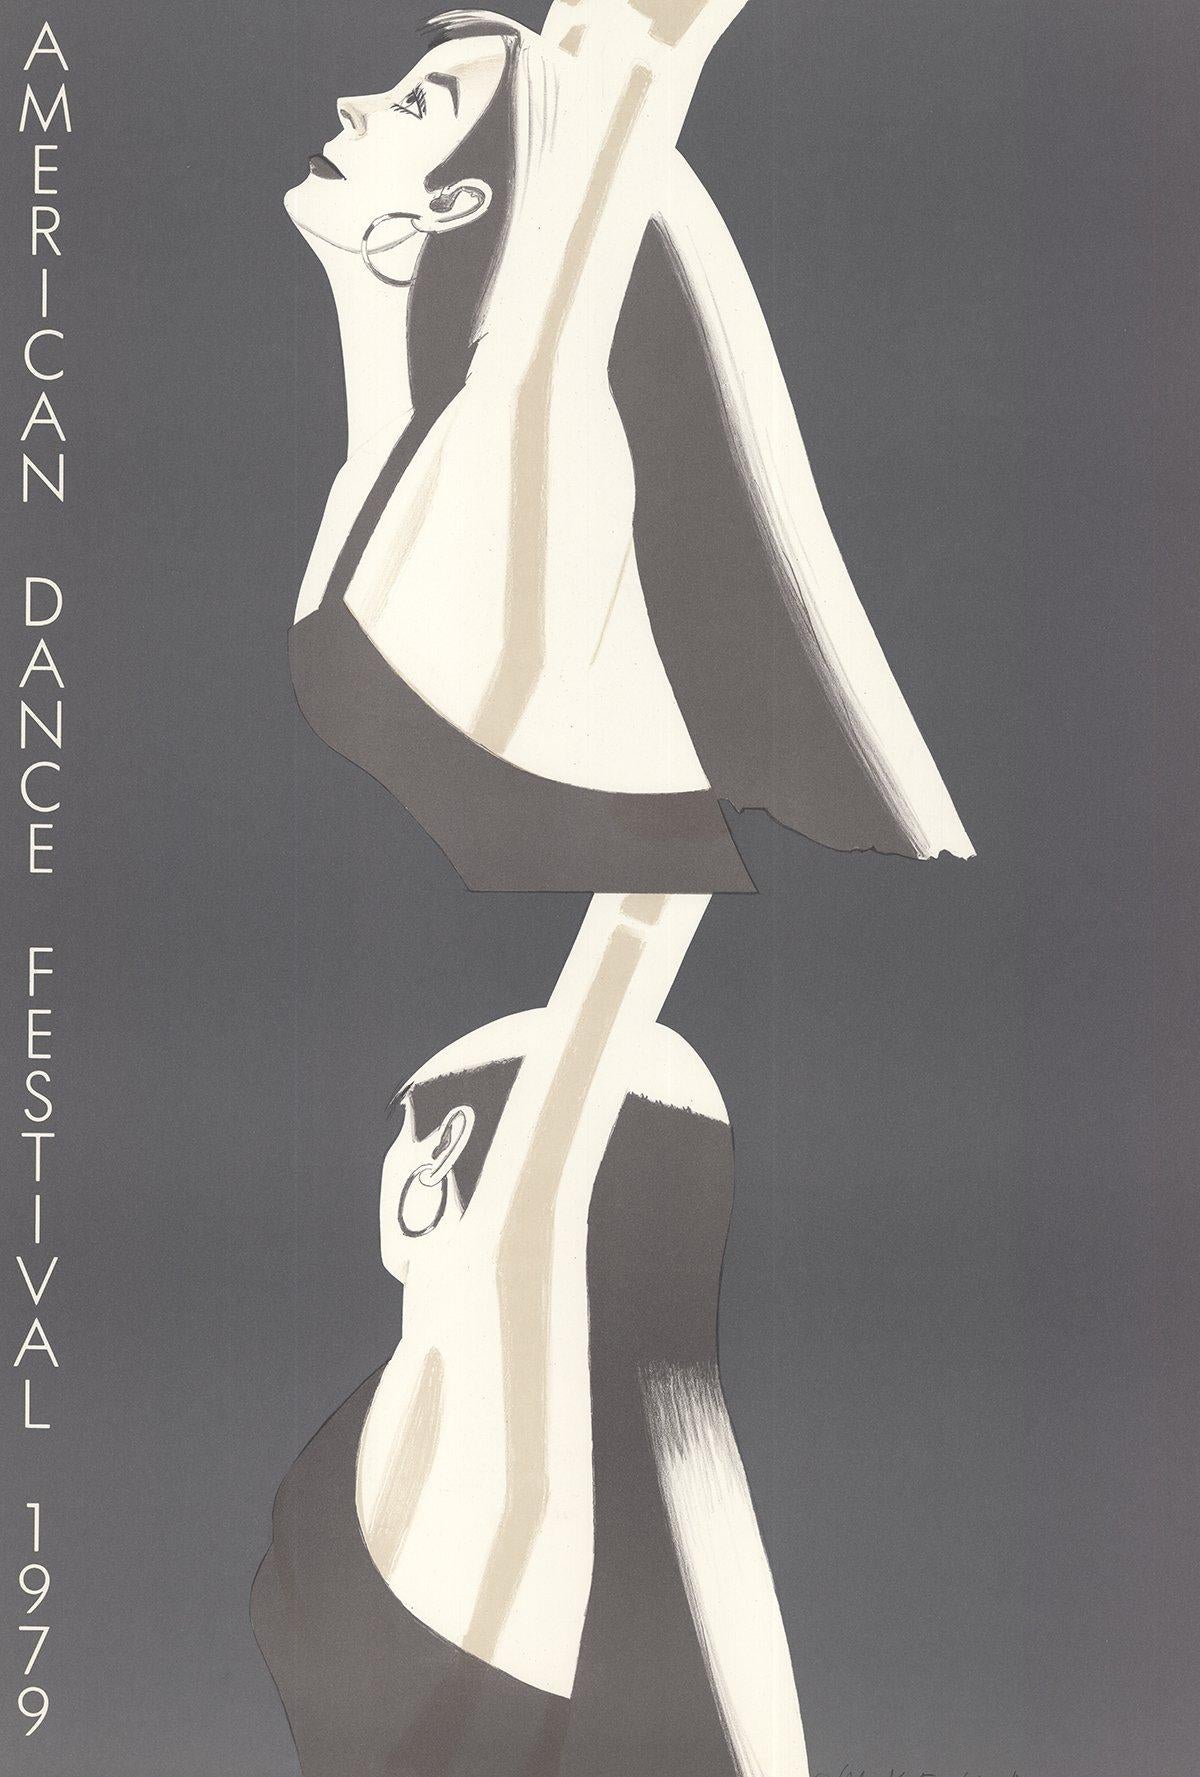 1979 Alex Katz „William Dunas Dance, Pamela-American Dance Festival“ 